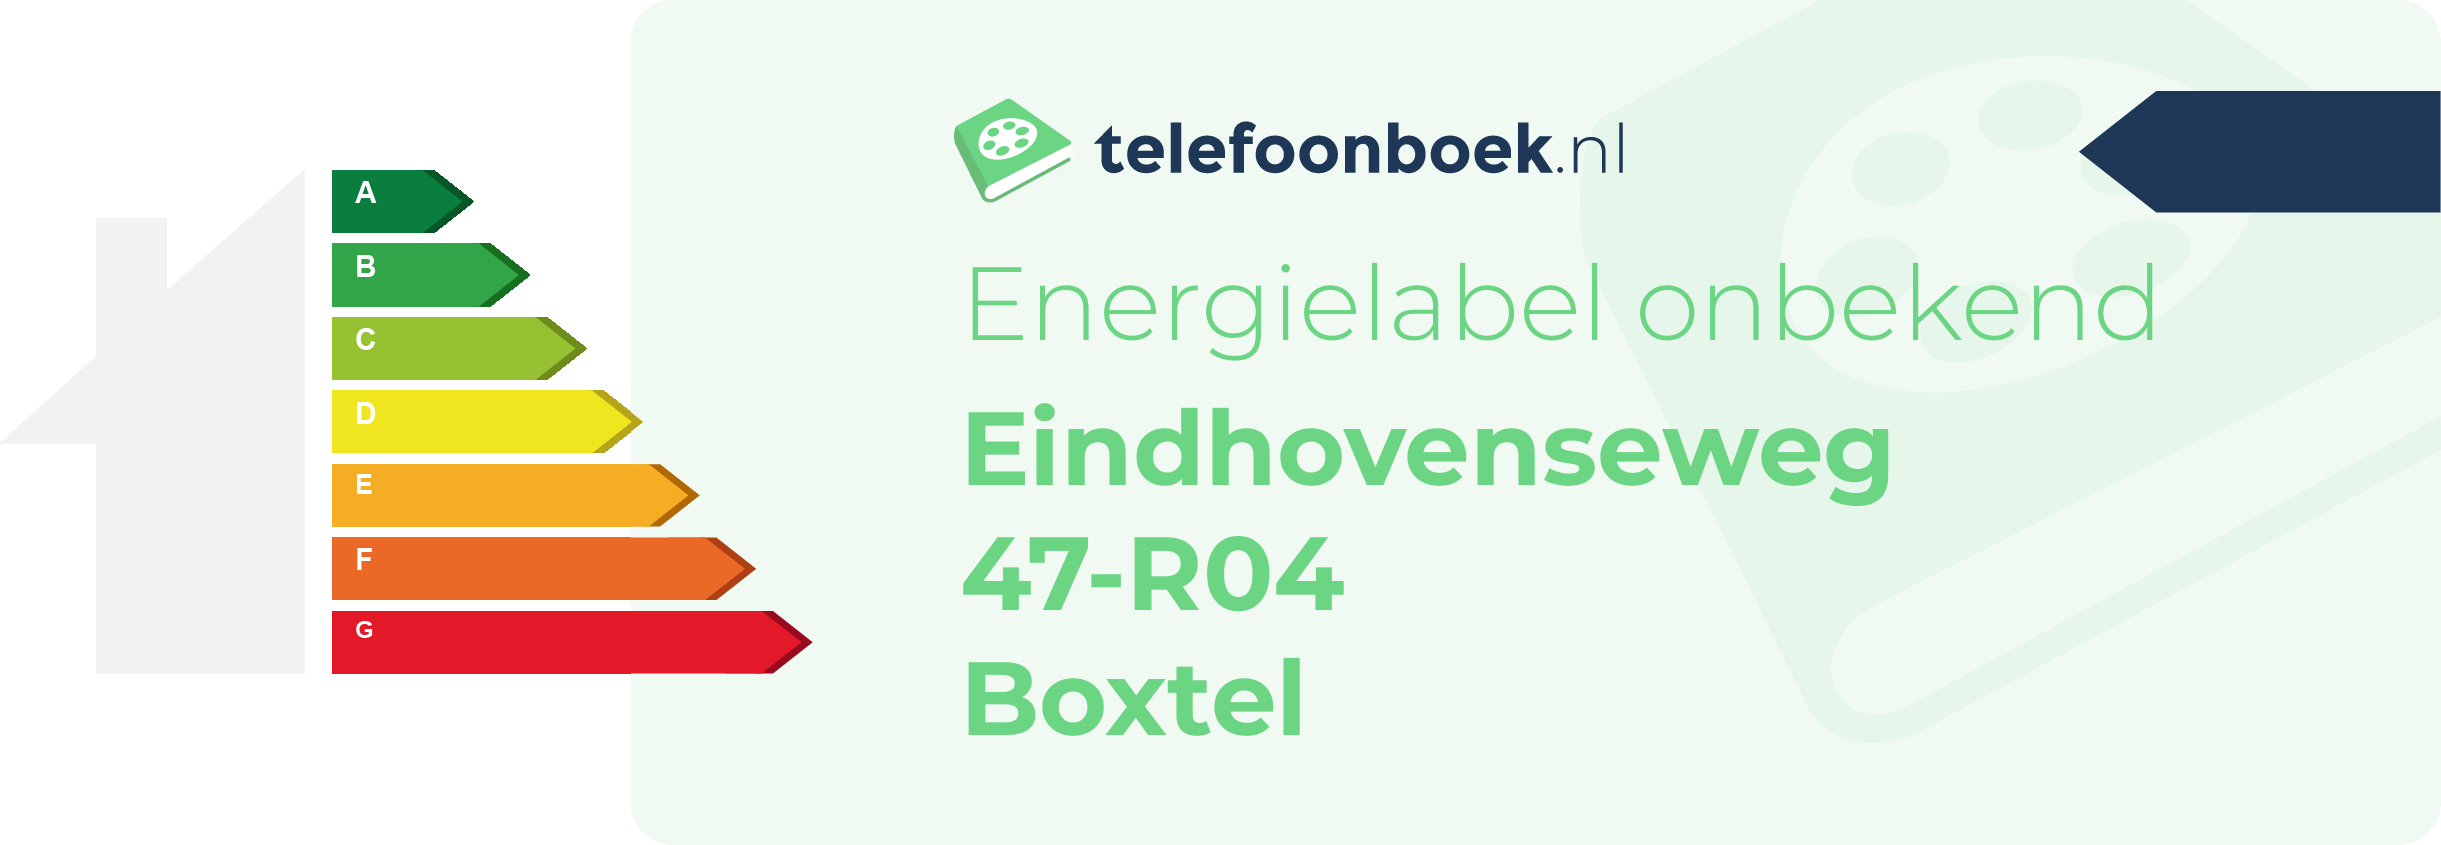 Energielabel Eindhovenseweg 47-R04 Boxtel